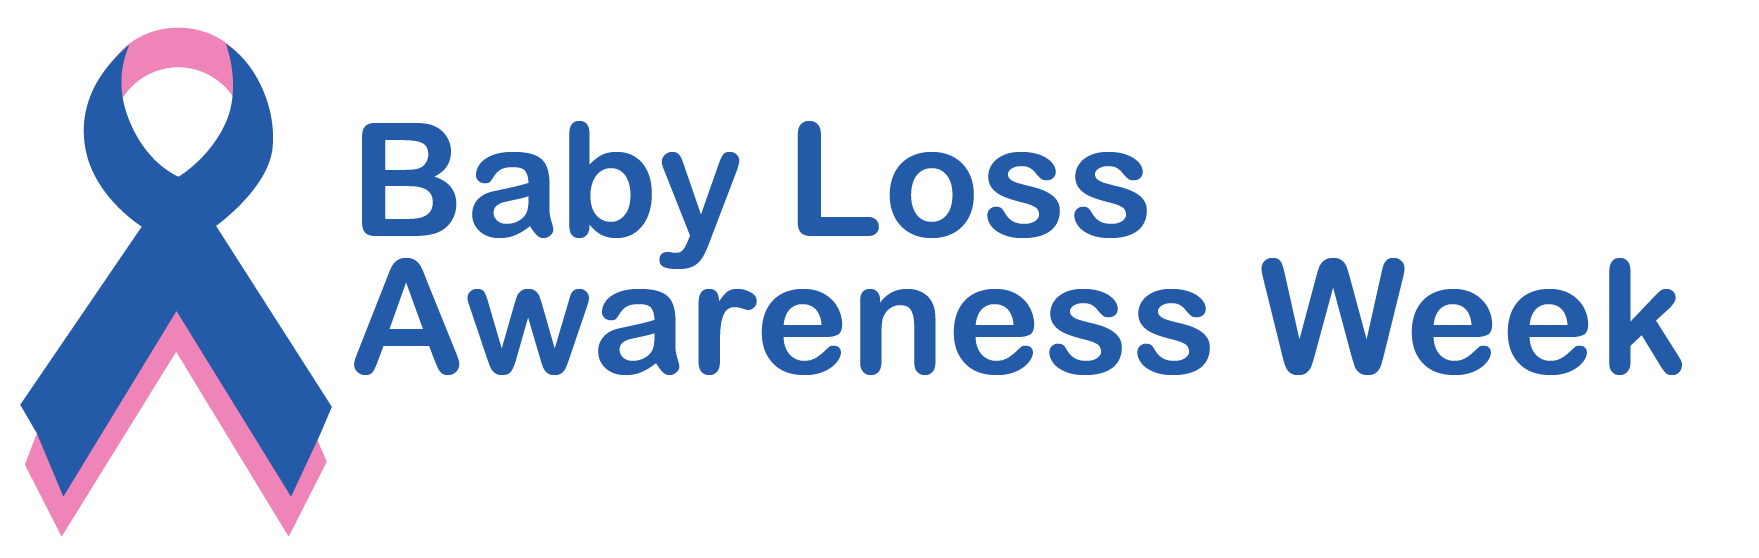 Baby Loss Awareness Week – Break the silence around baby loss